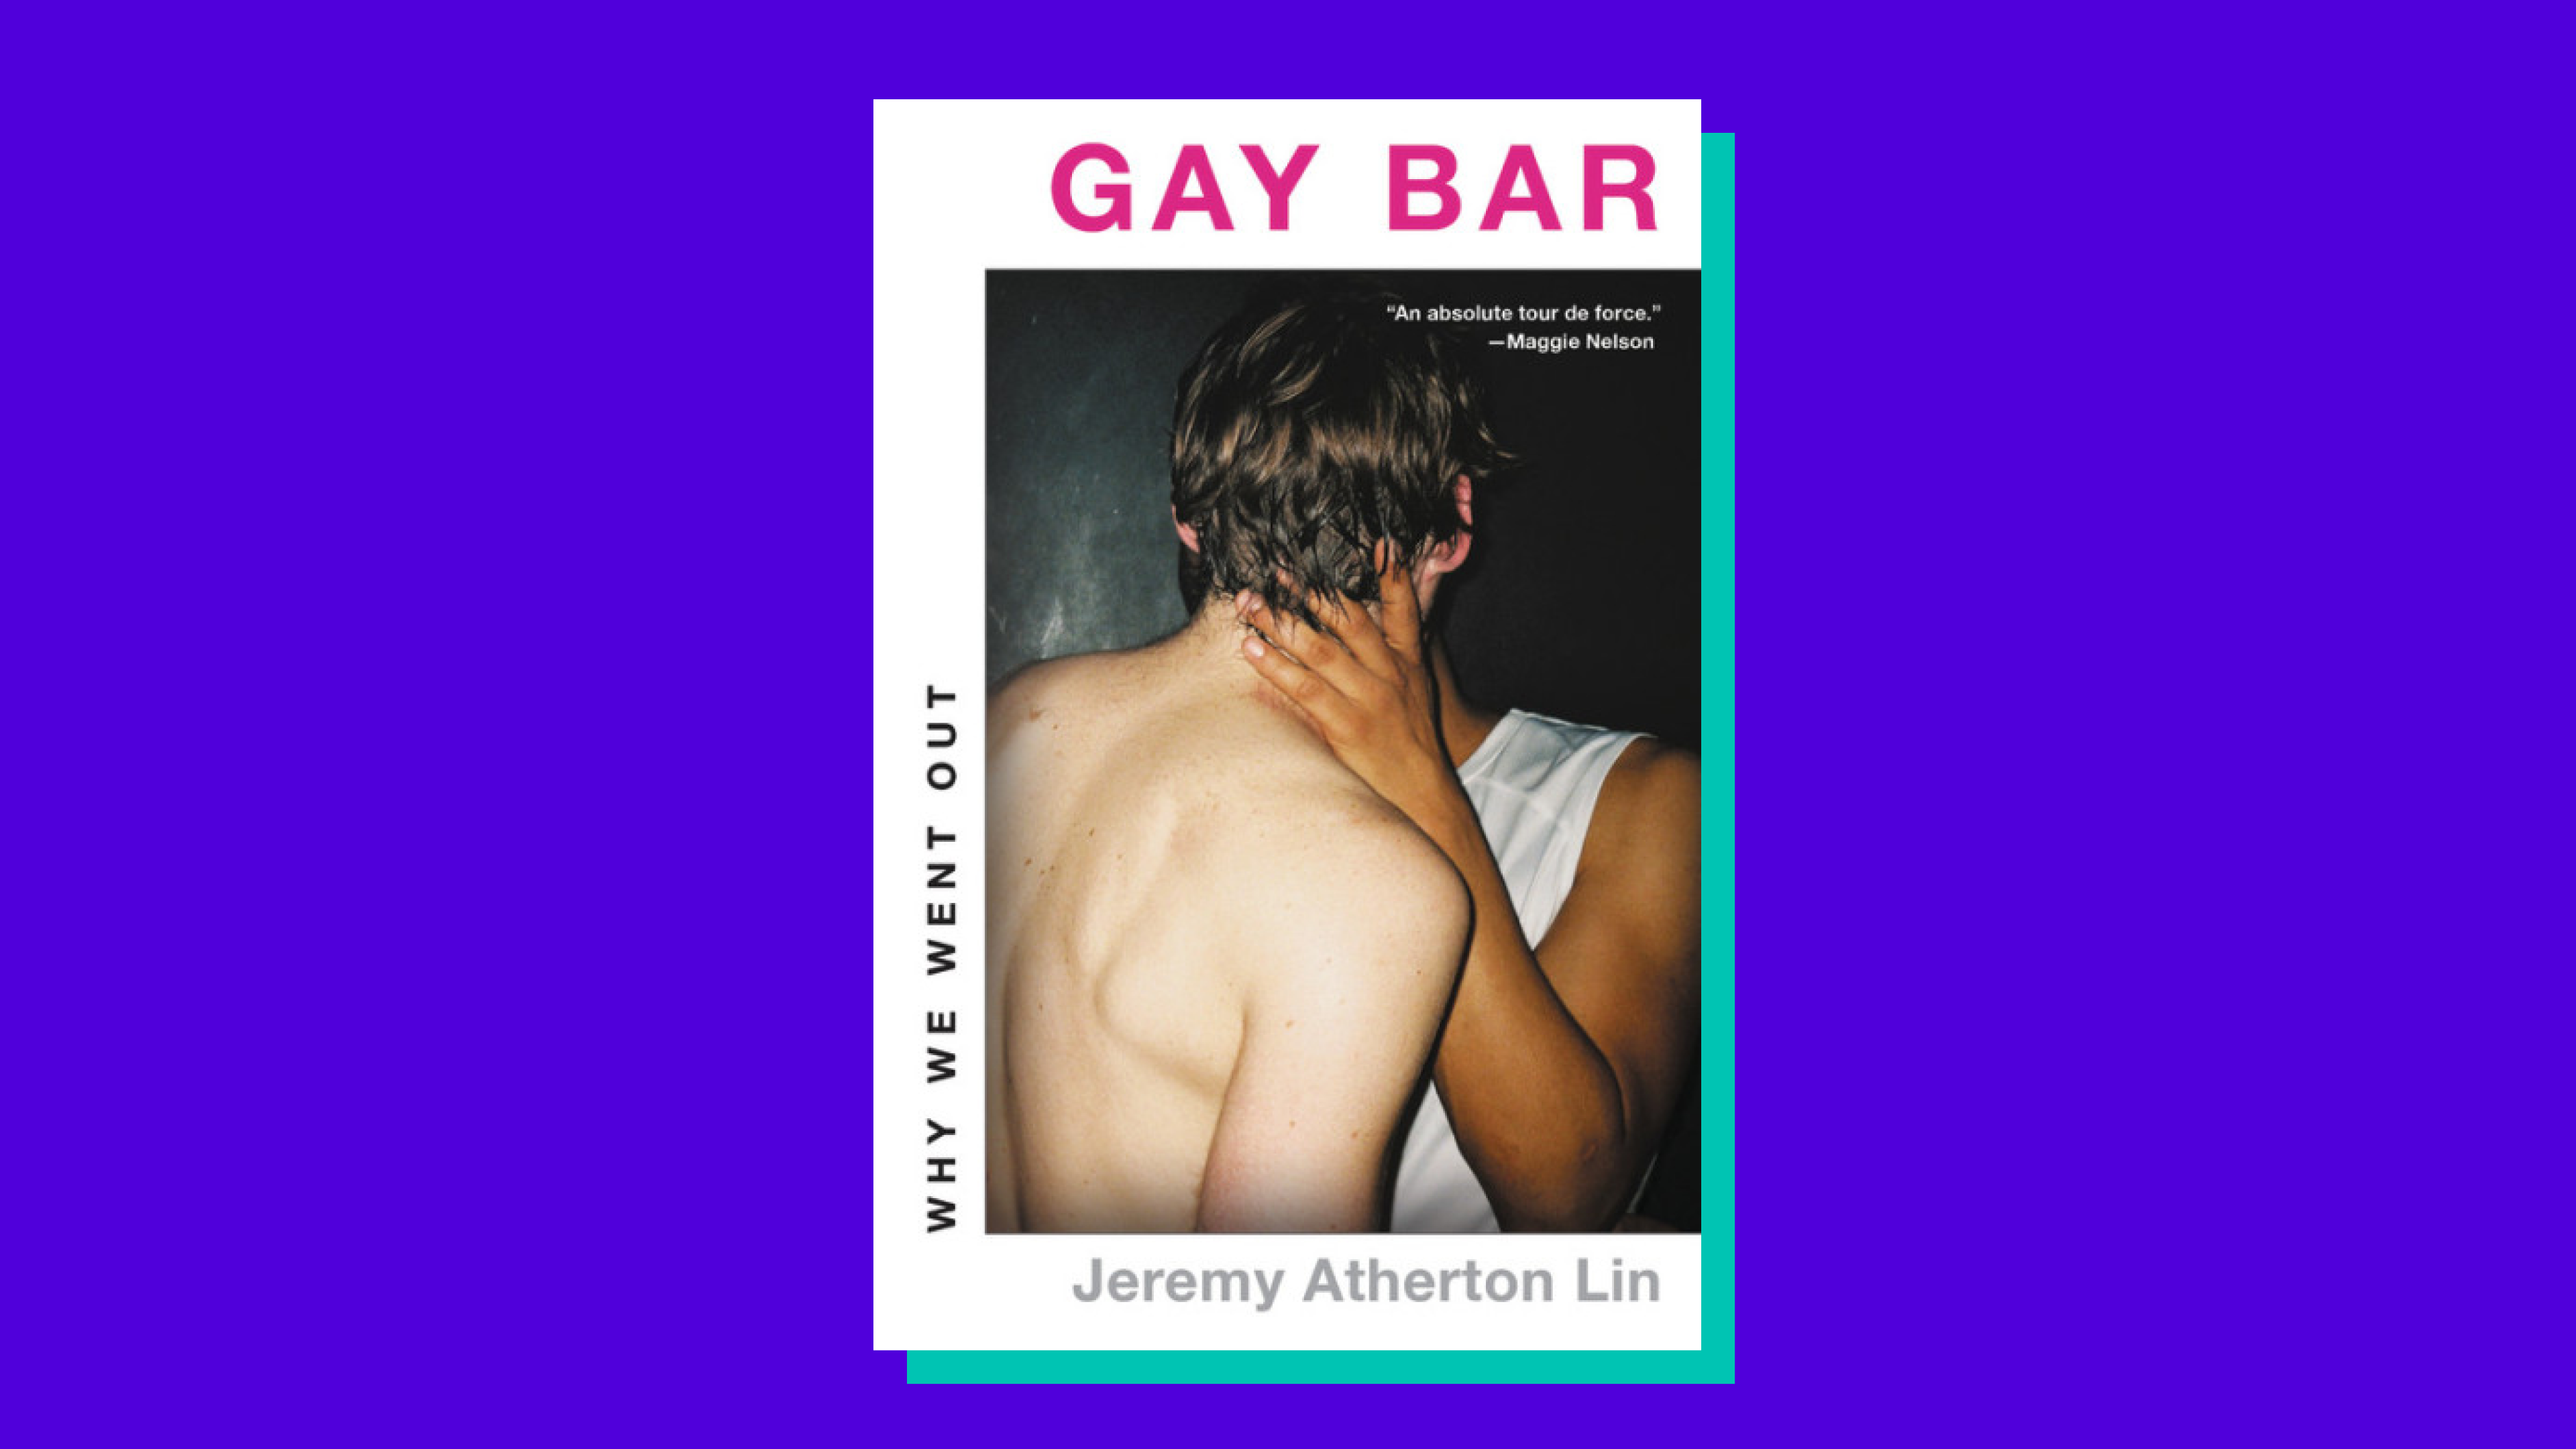 “Gay Bar” by Jeremy Atherton Lin